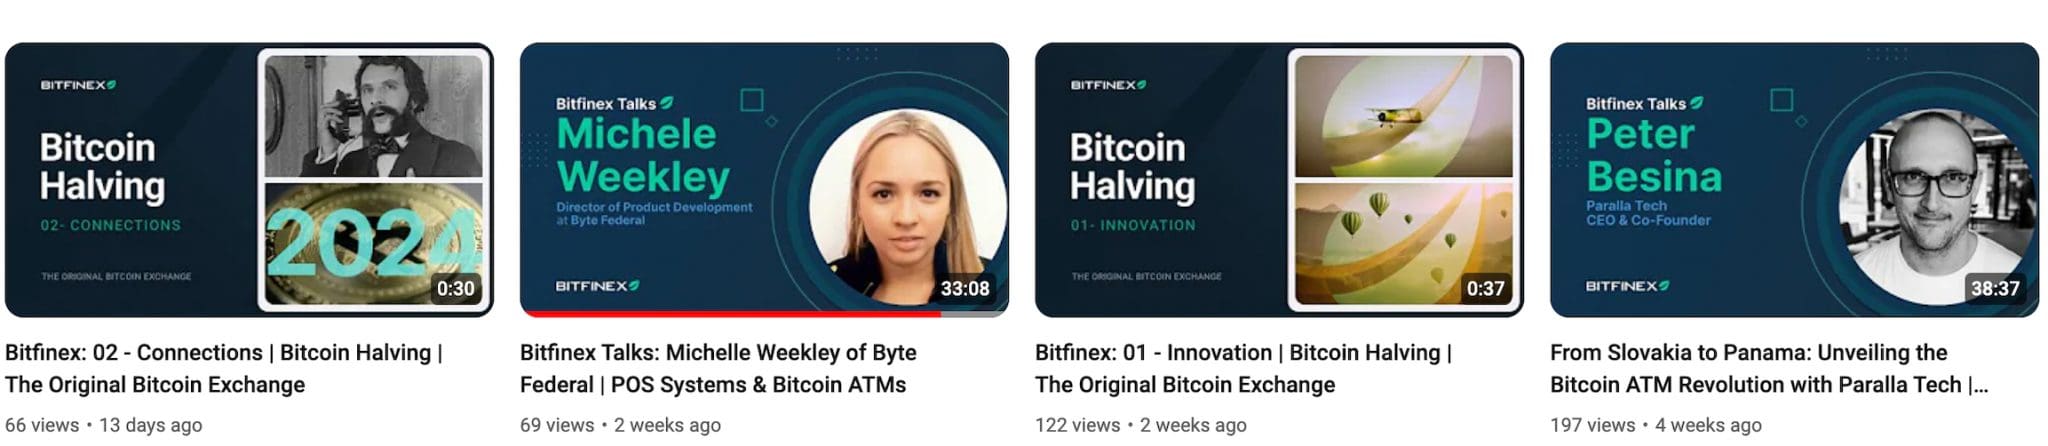 Bitfinex channels on YouTube